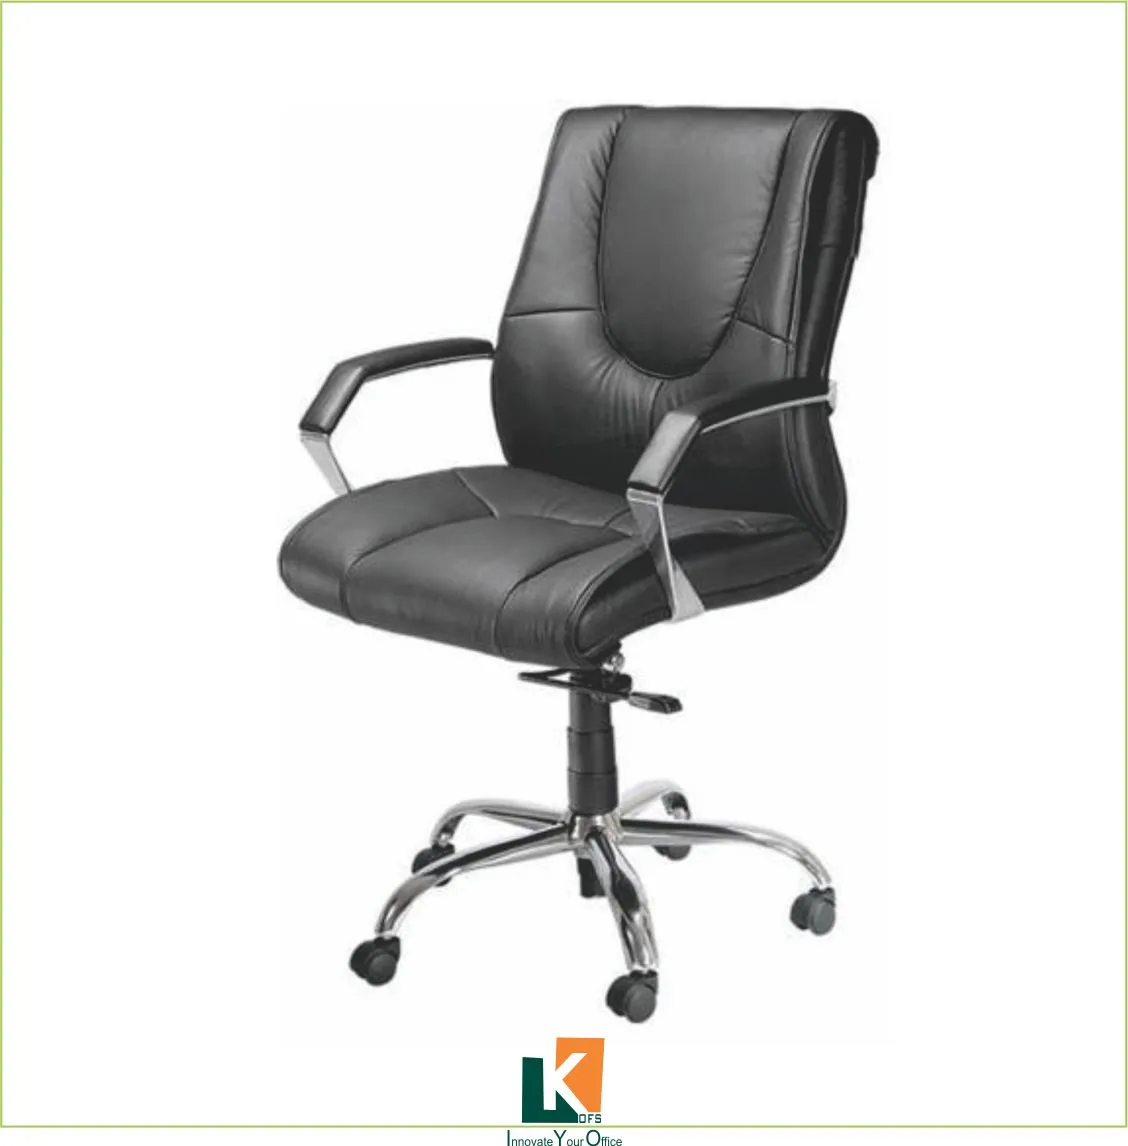 KOFS-modular office furniture | office interior solution